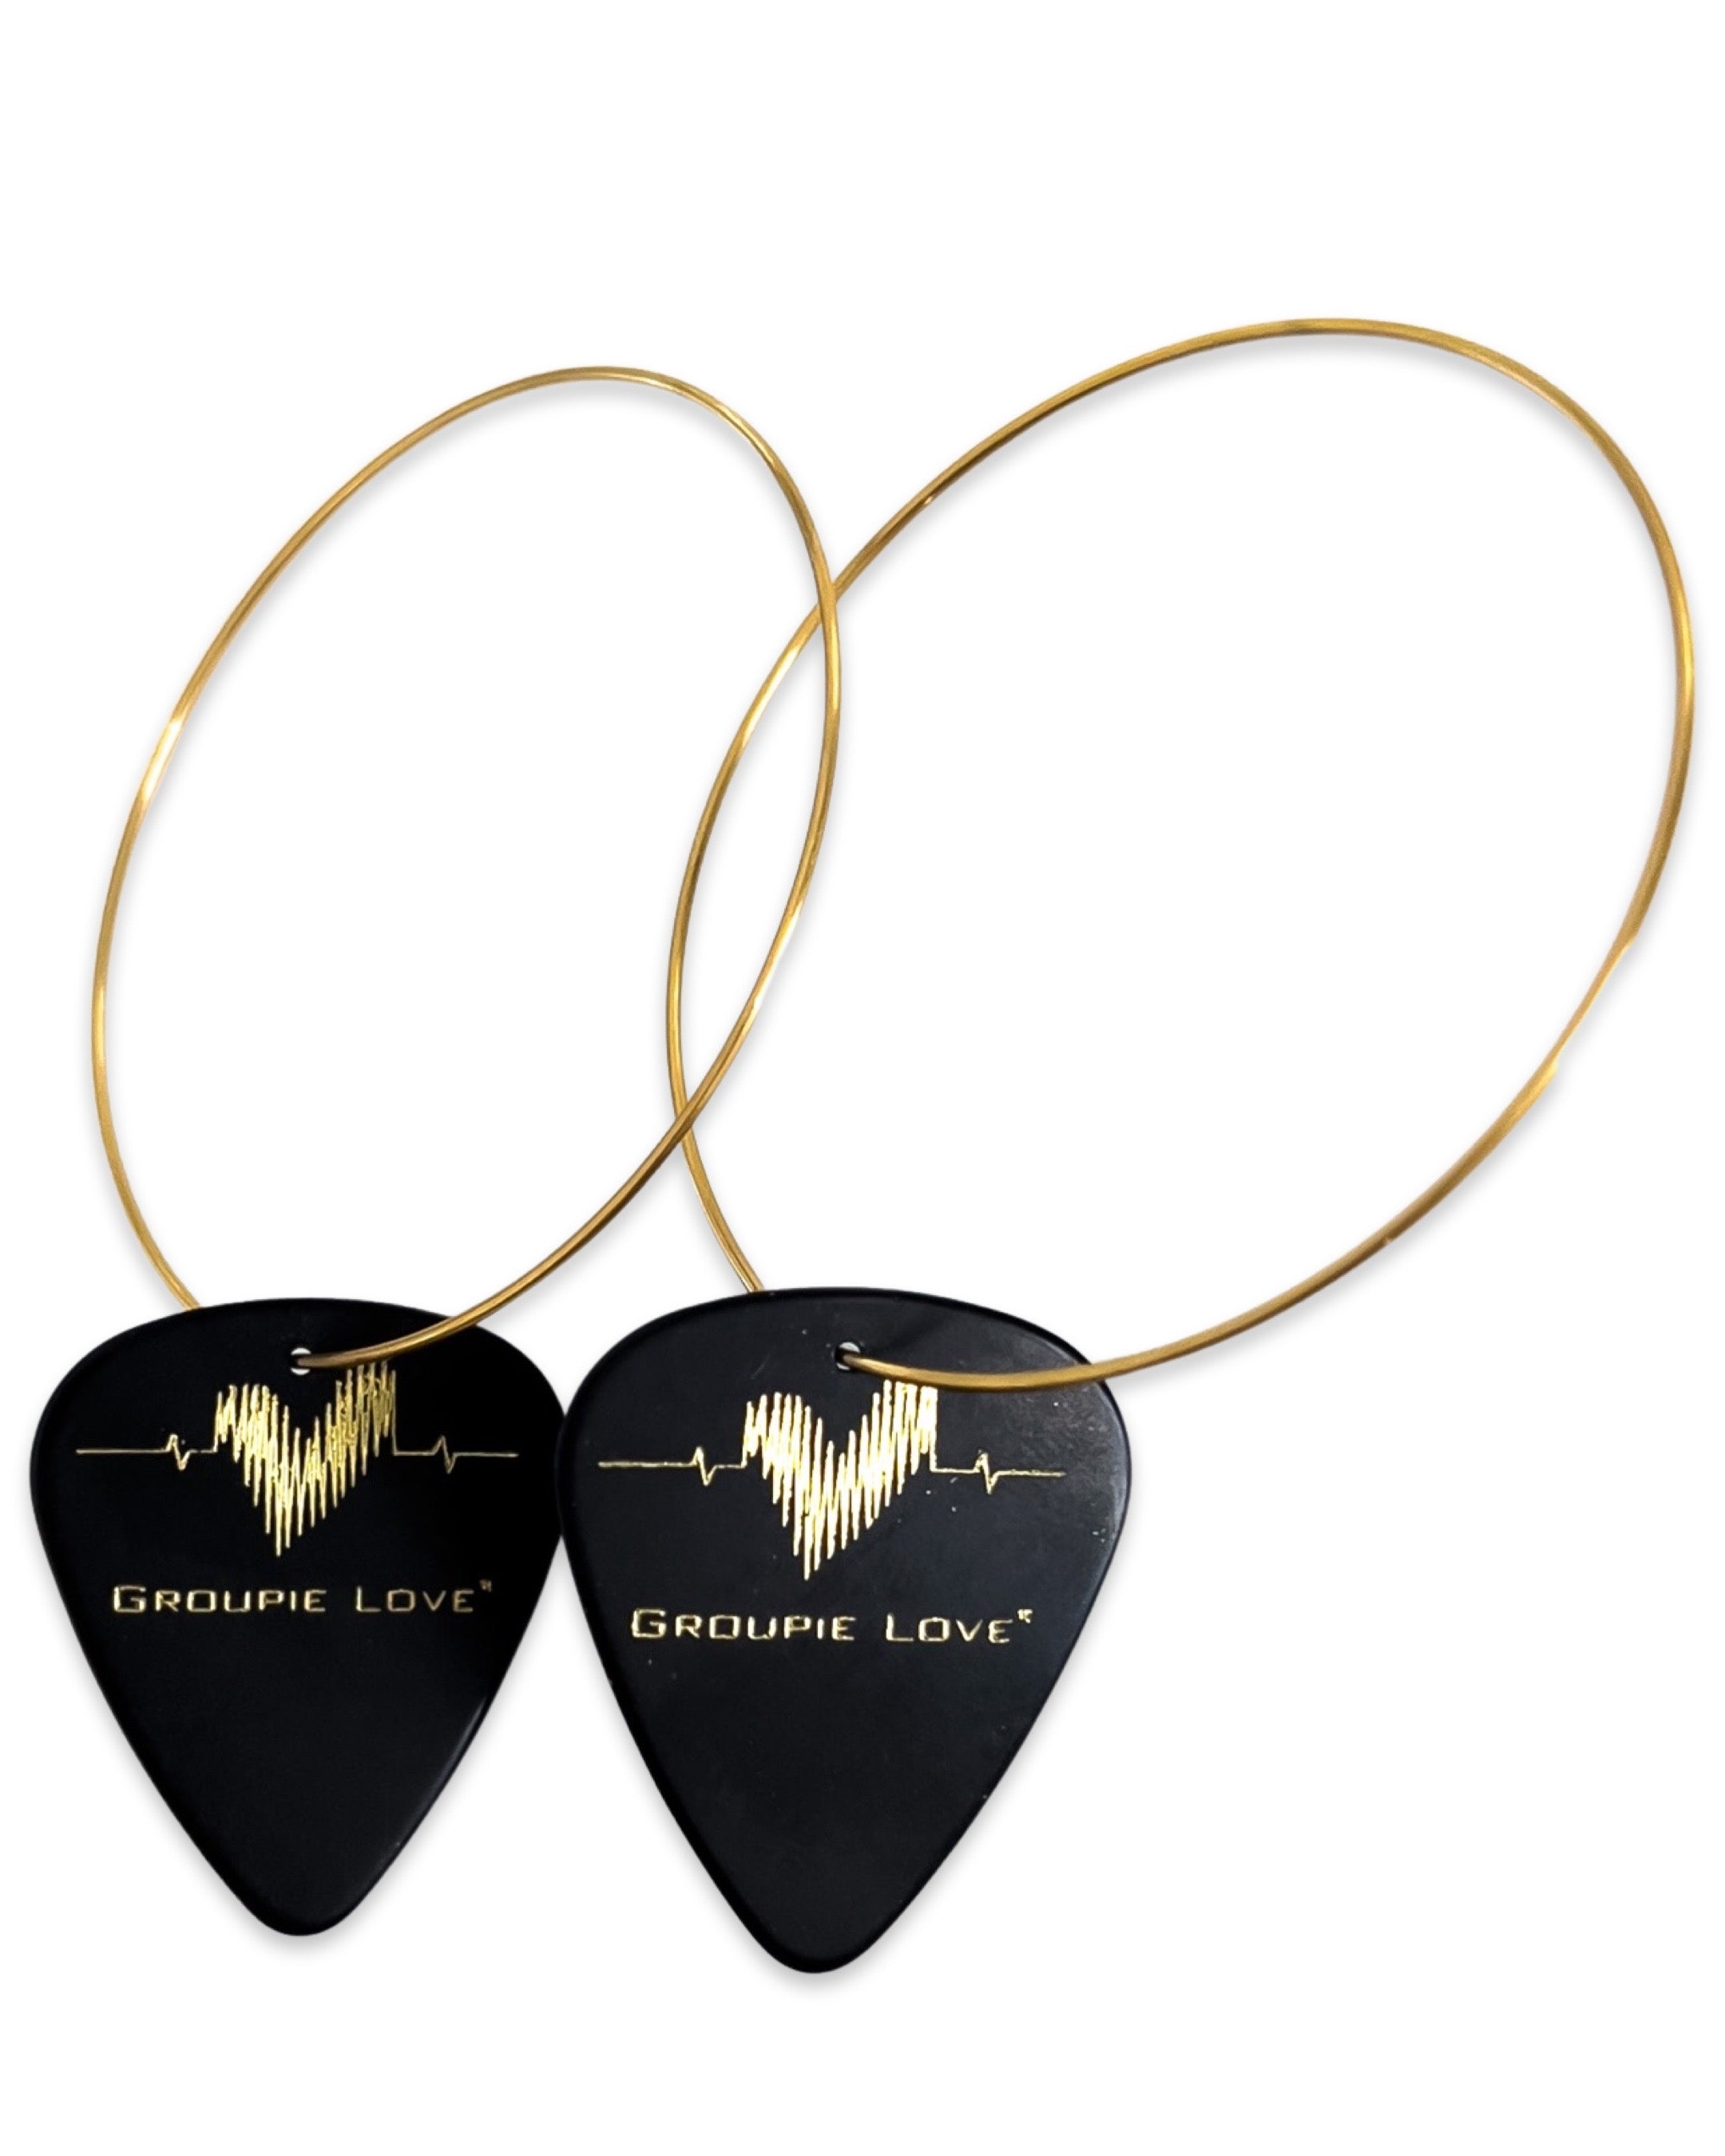 WS Groupie Love Black Gold Single Guitar Pick Earrings